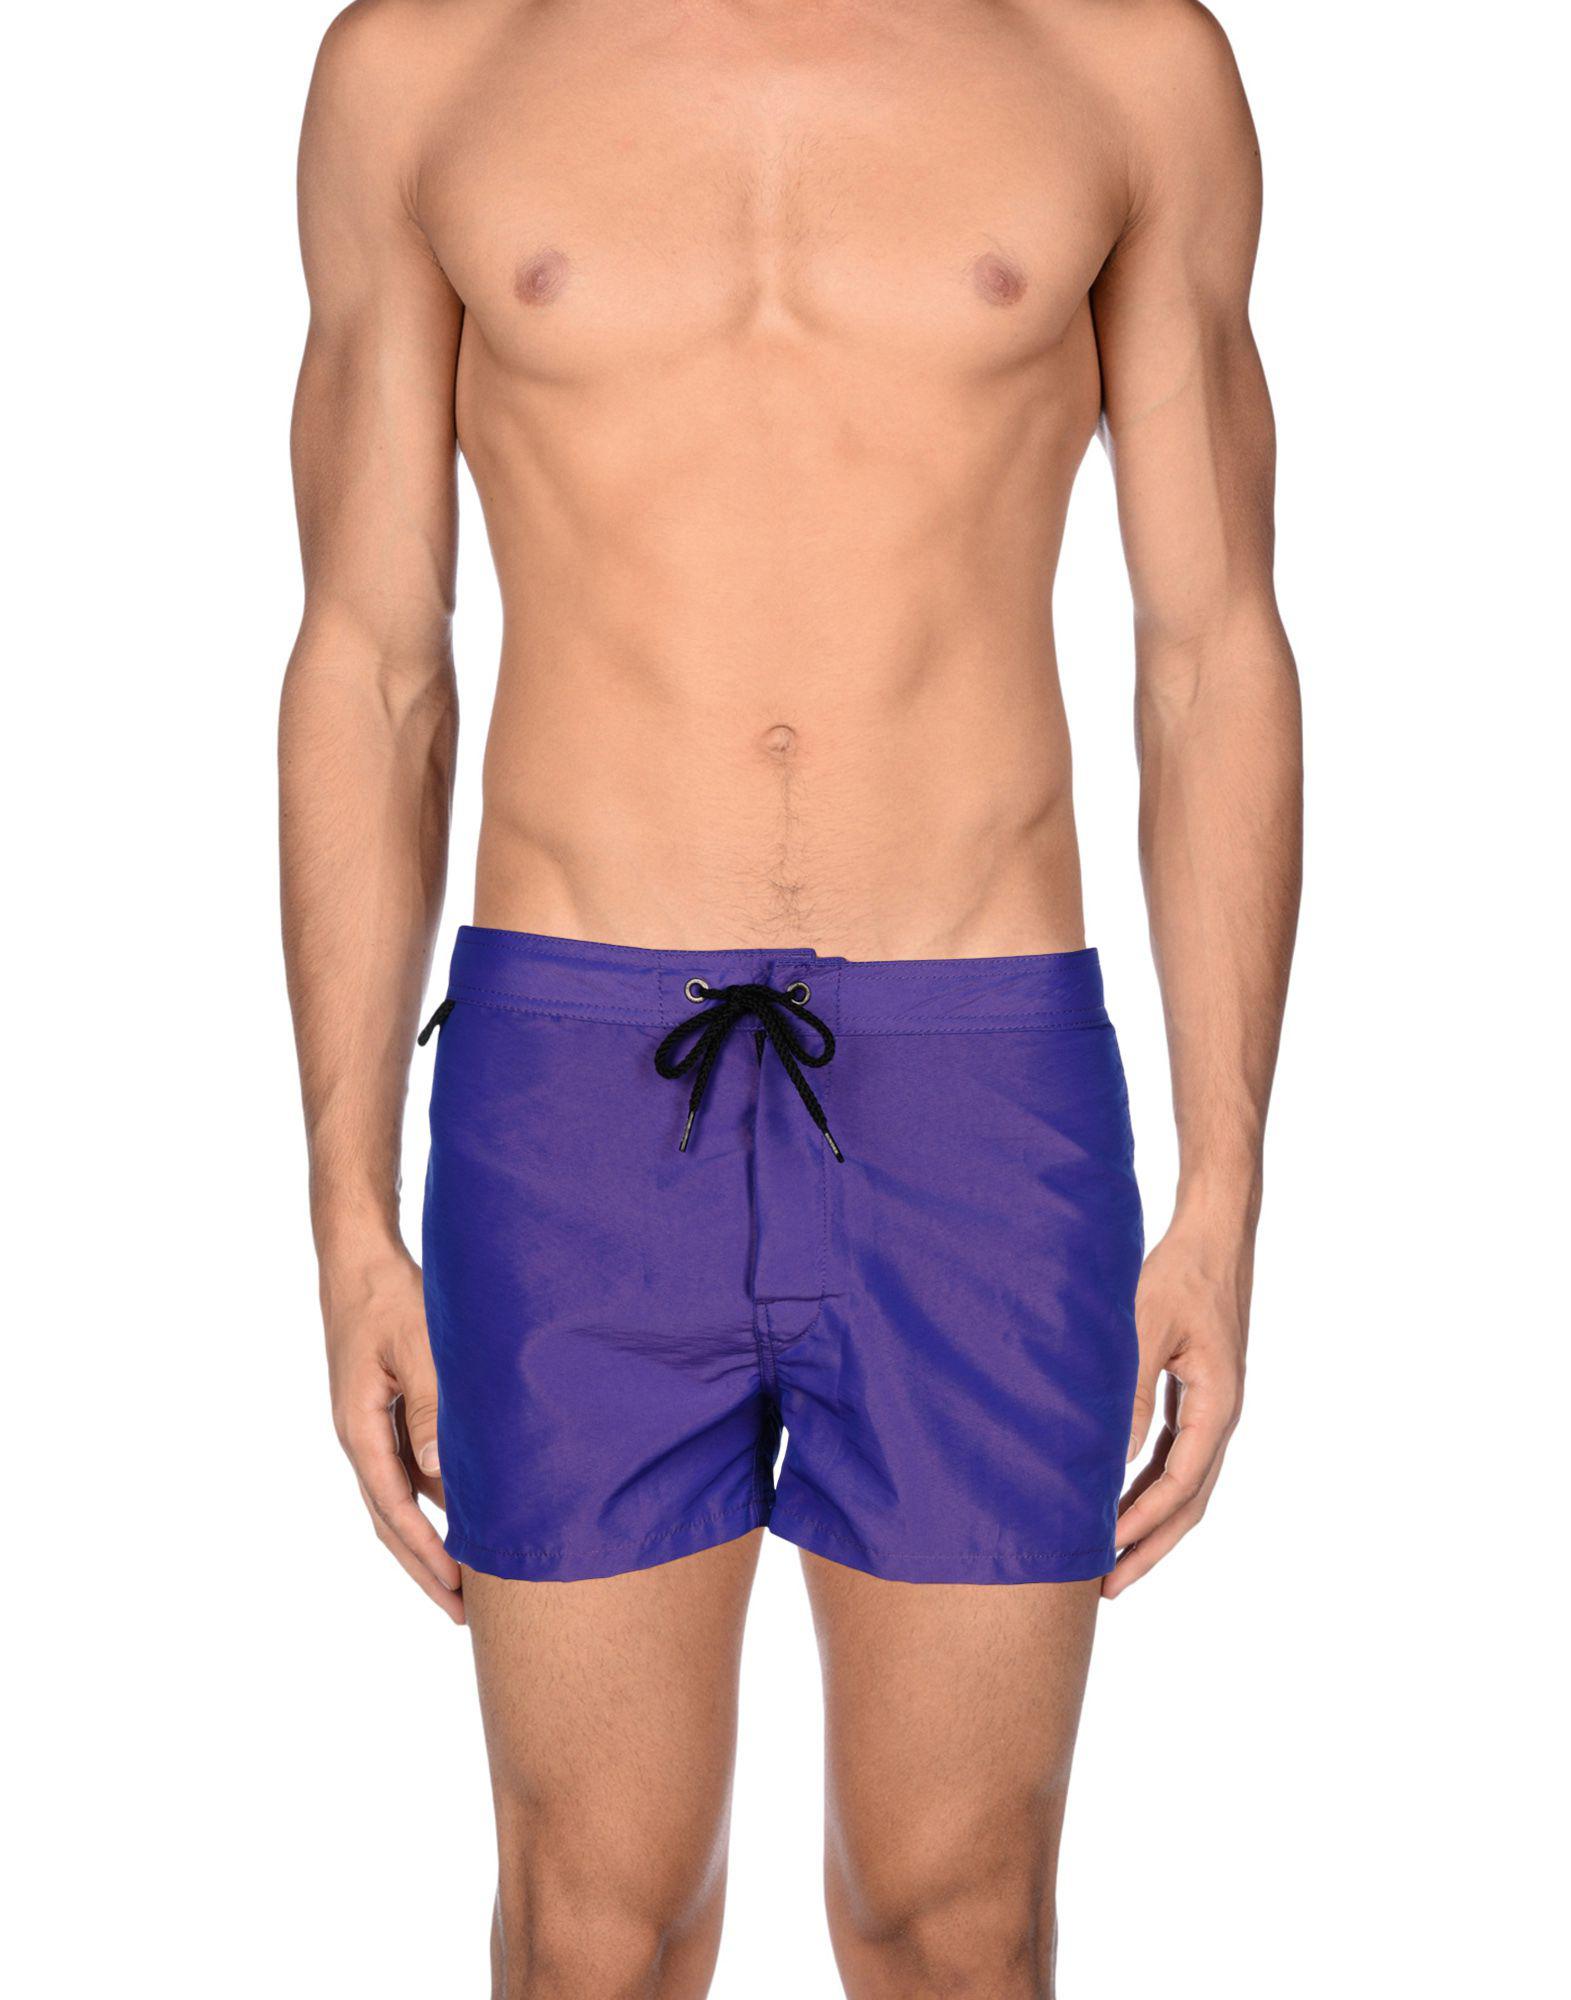 Sundek Synthetic Swimming Trunk in Purple for Men - Lyst